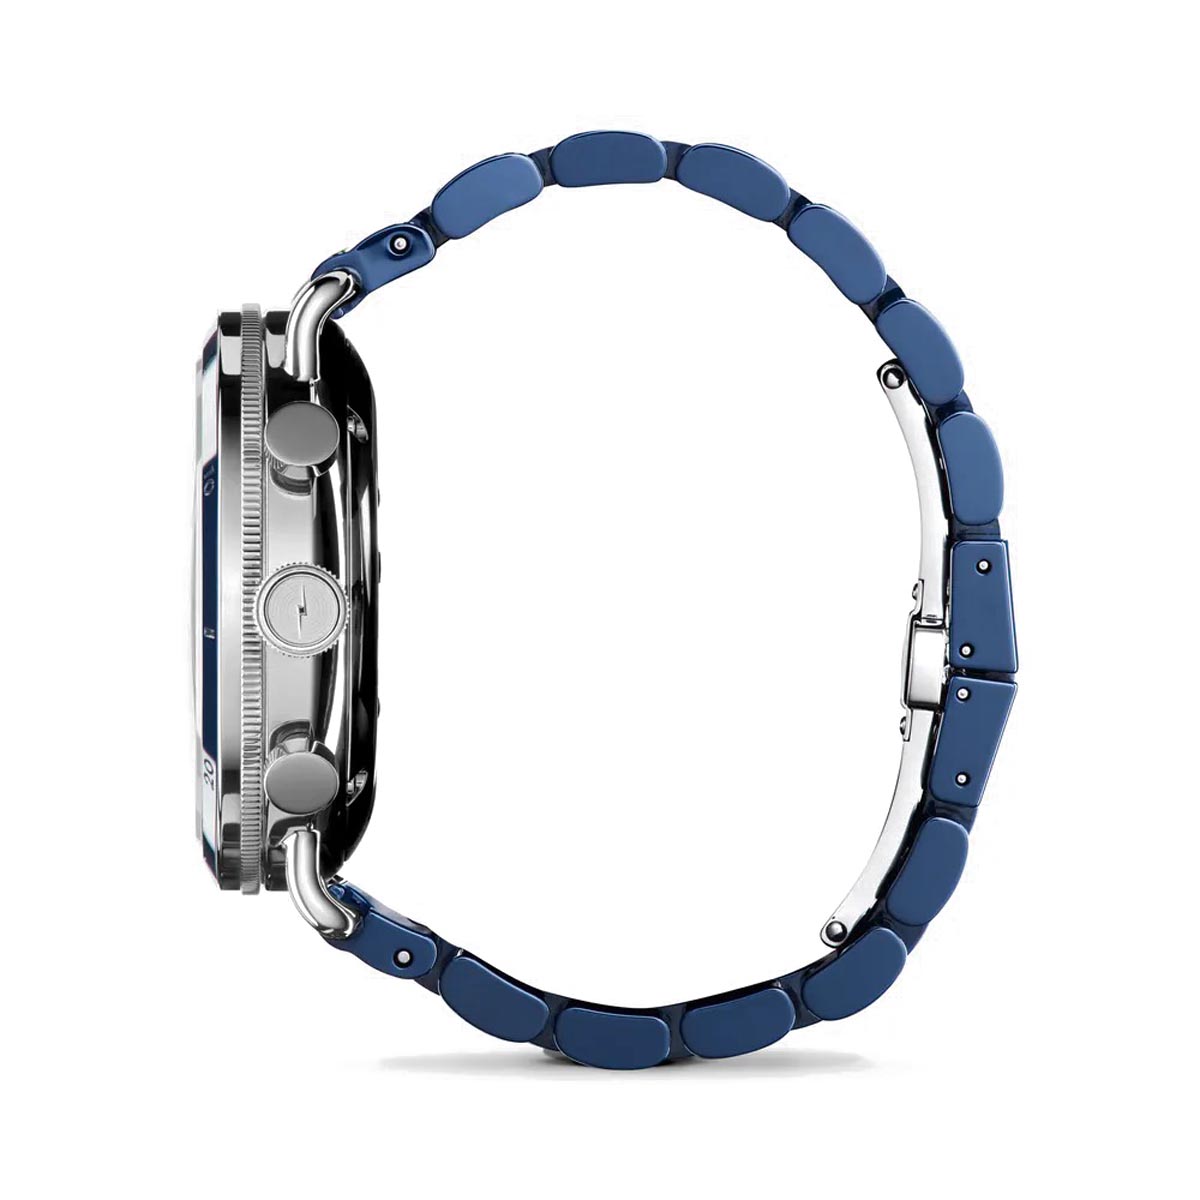 Shinola Canfield Sport Watch with Blue Dial and Blue Ceramic Bracelet (quartz movement)